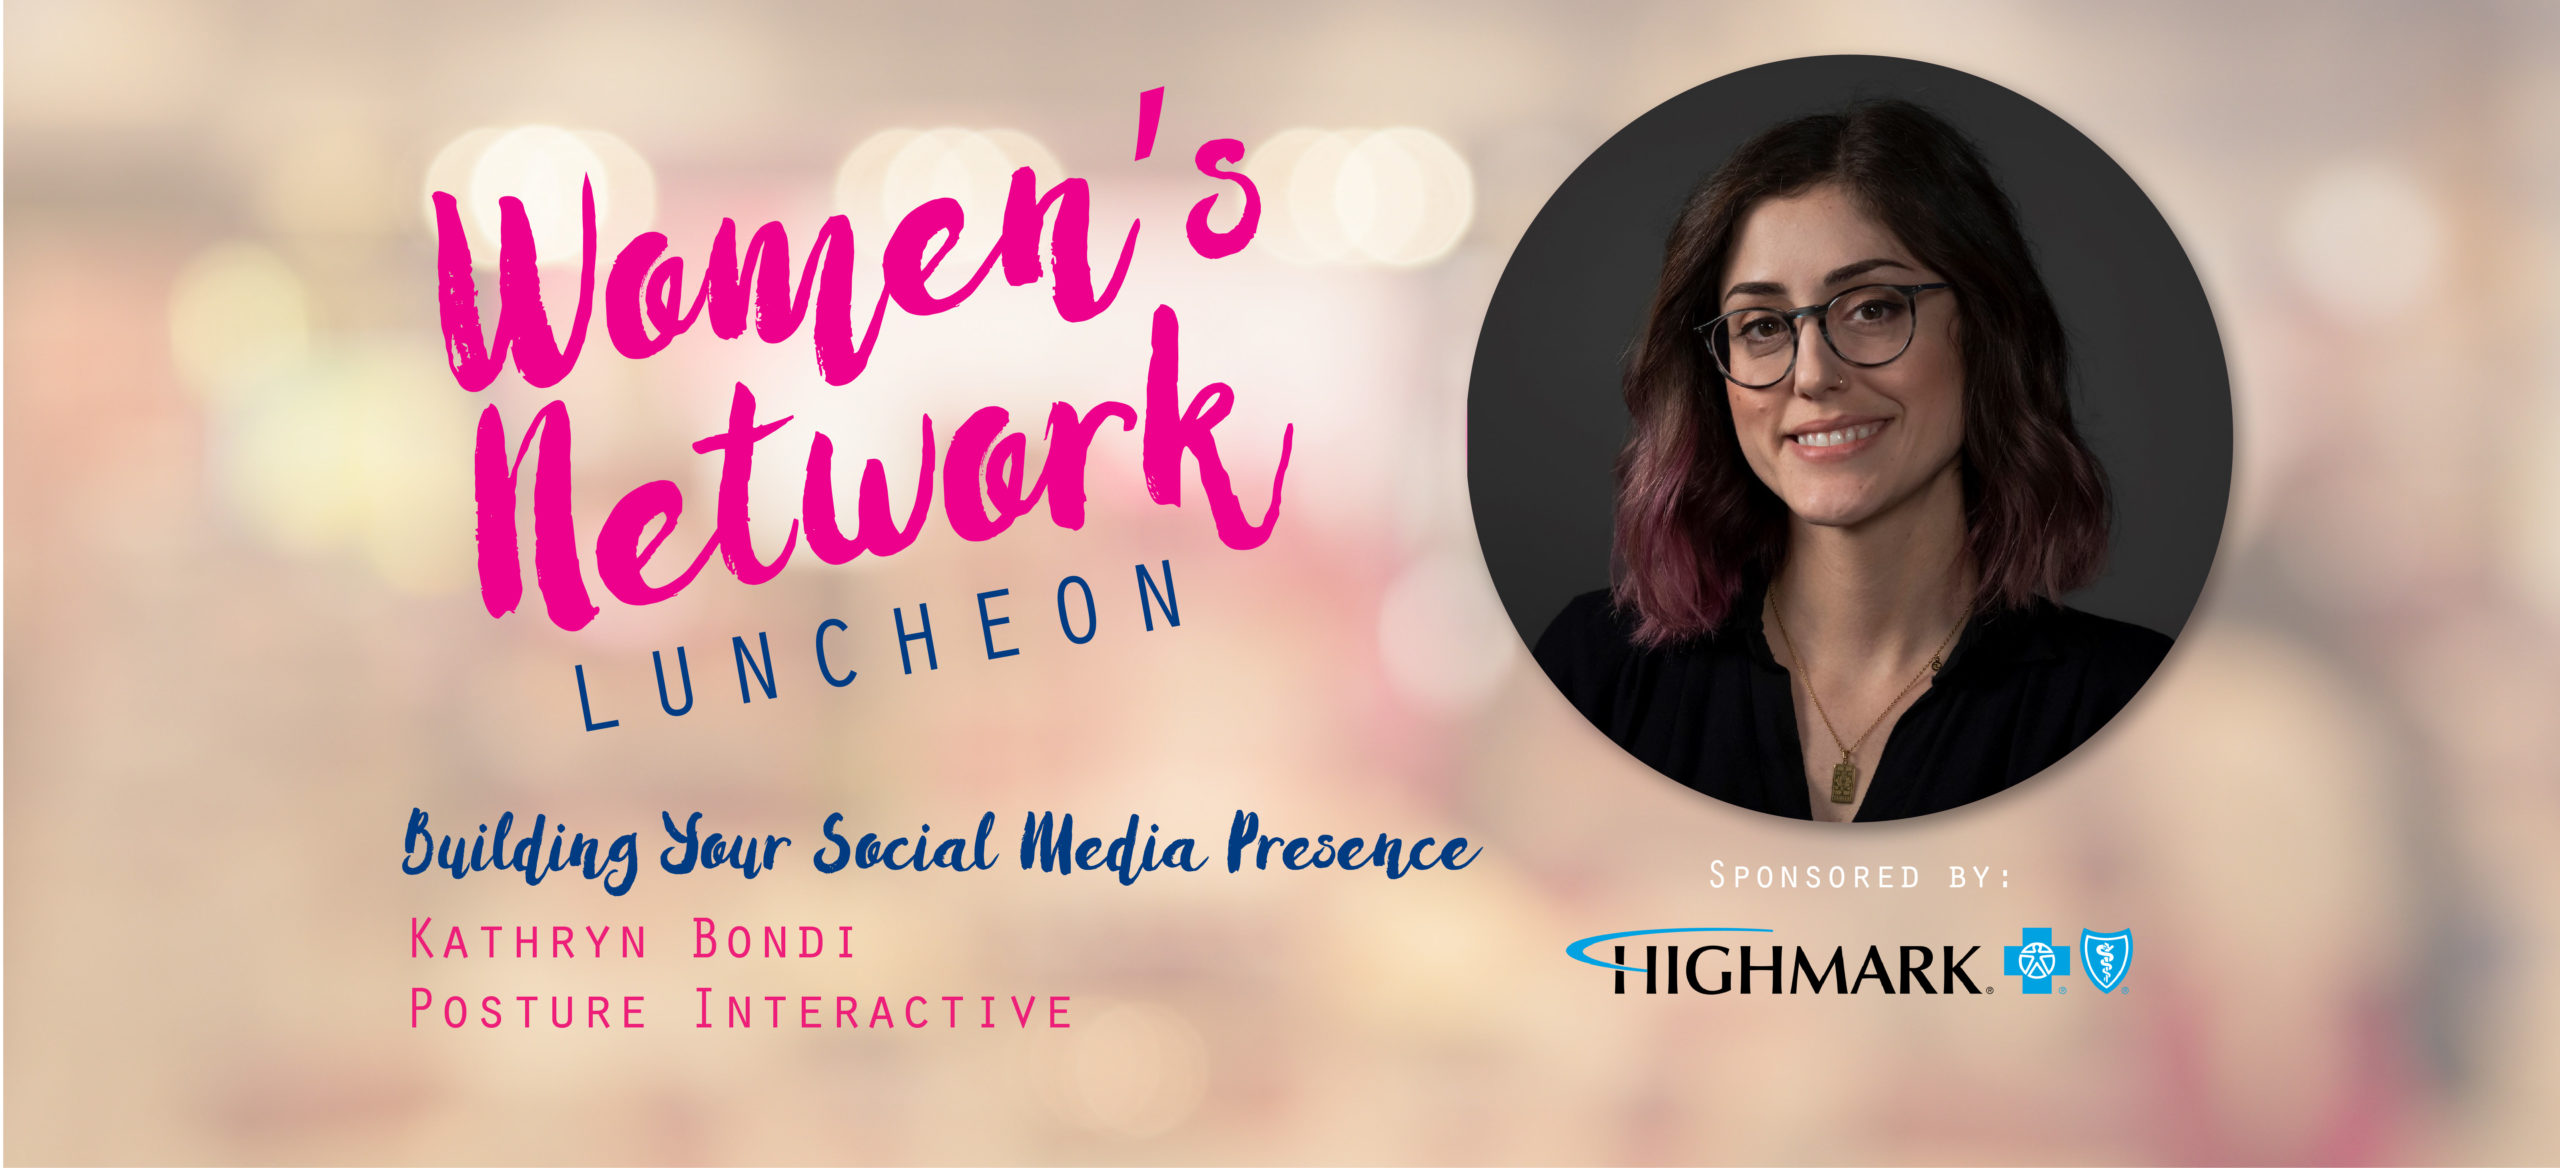 Women's Network Luncheon: Building Your Social Media Presence